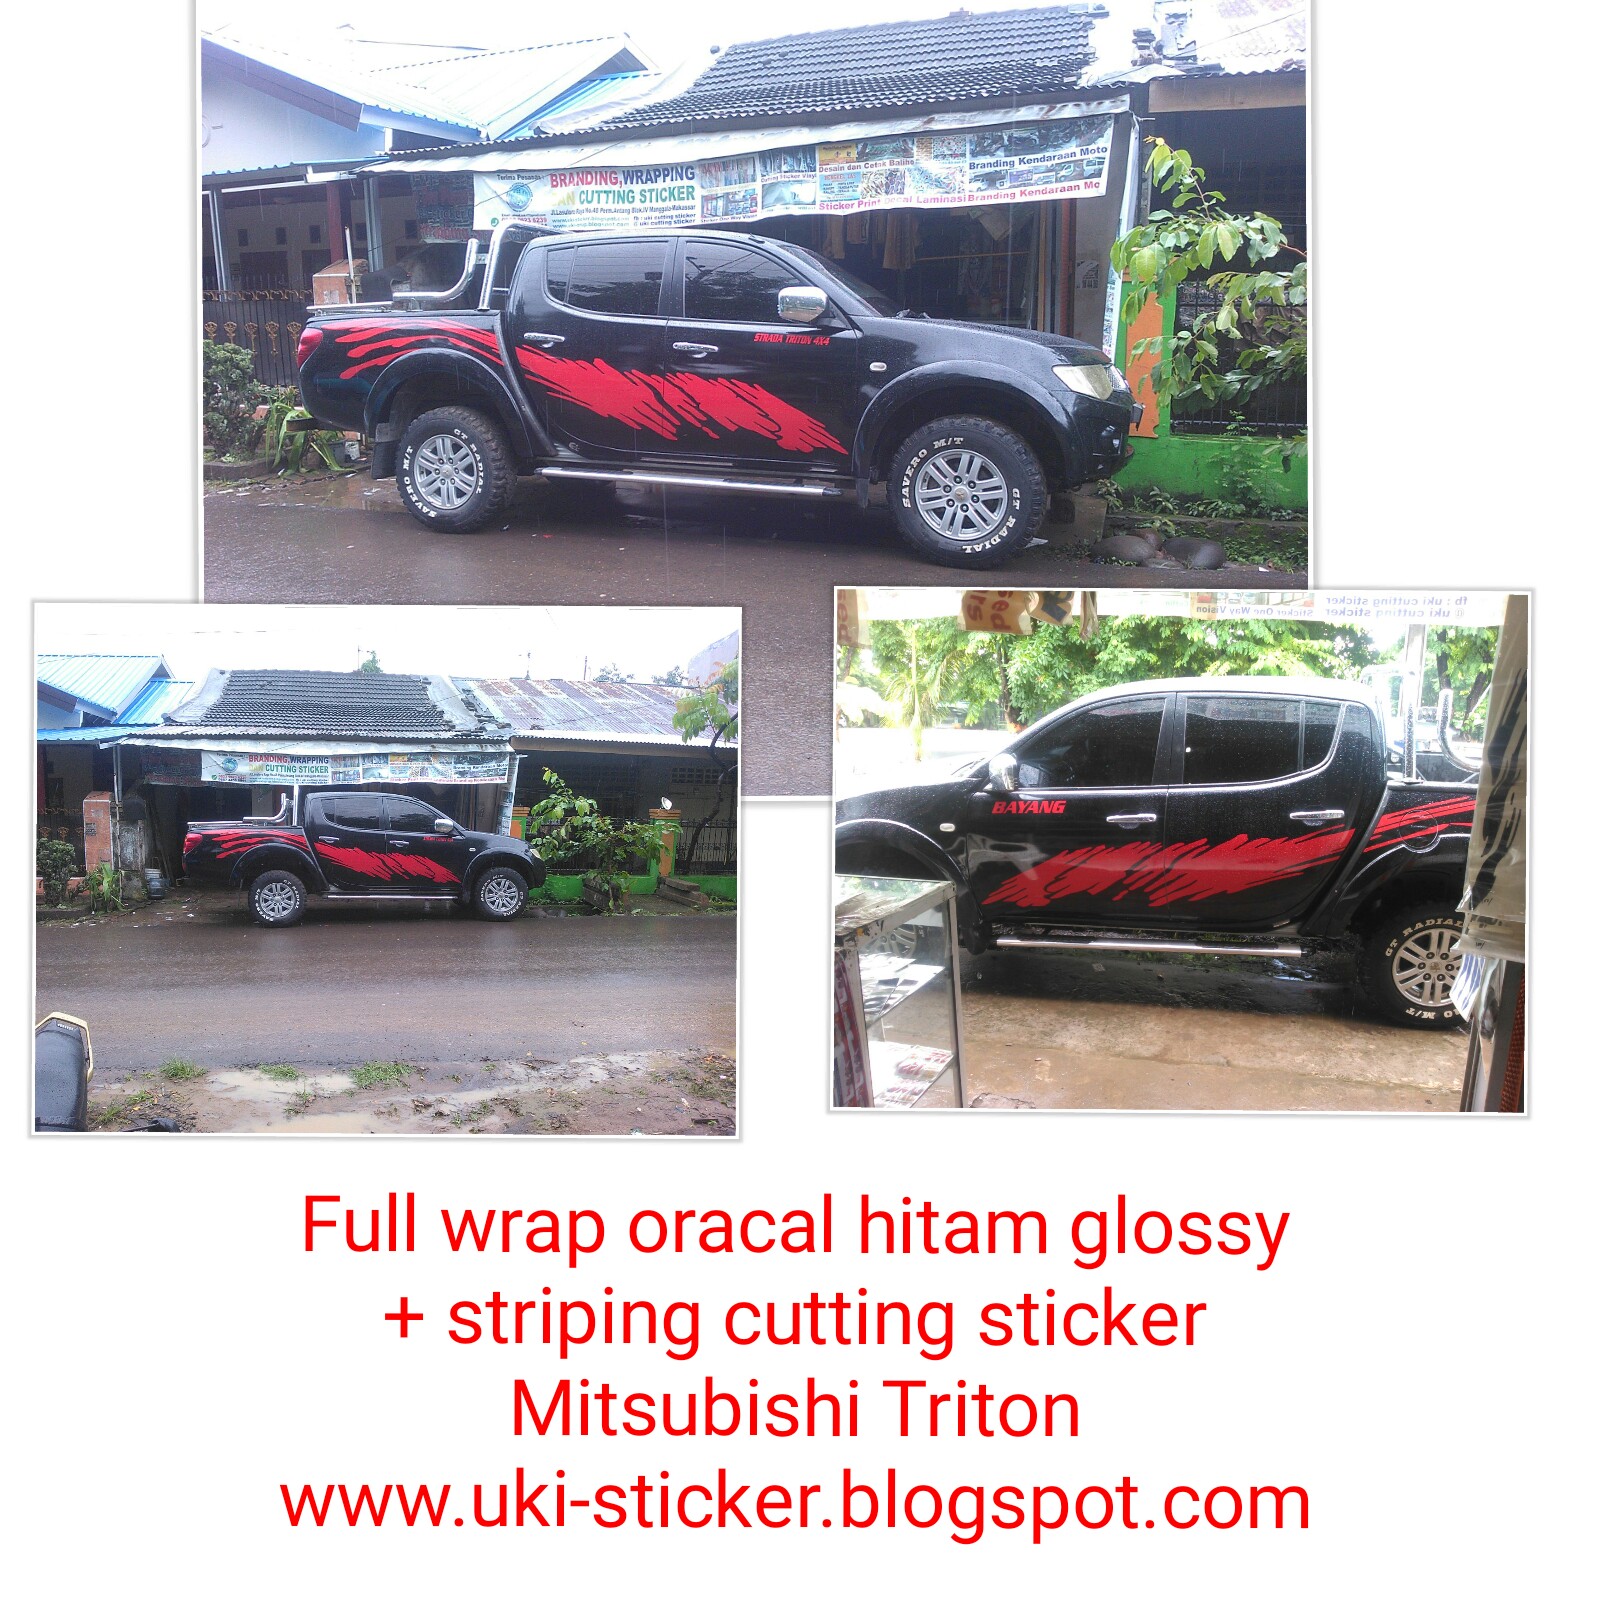 Tempat Cutting Sticker Motor Mobil Di Makassar Harga Branding Wrapping Sticker Mobil Dan Motor Makassar